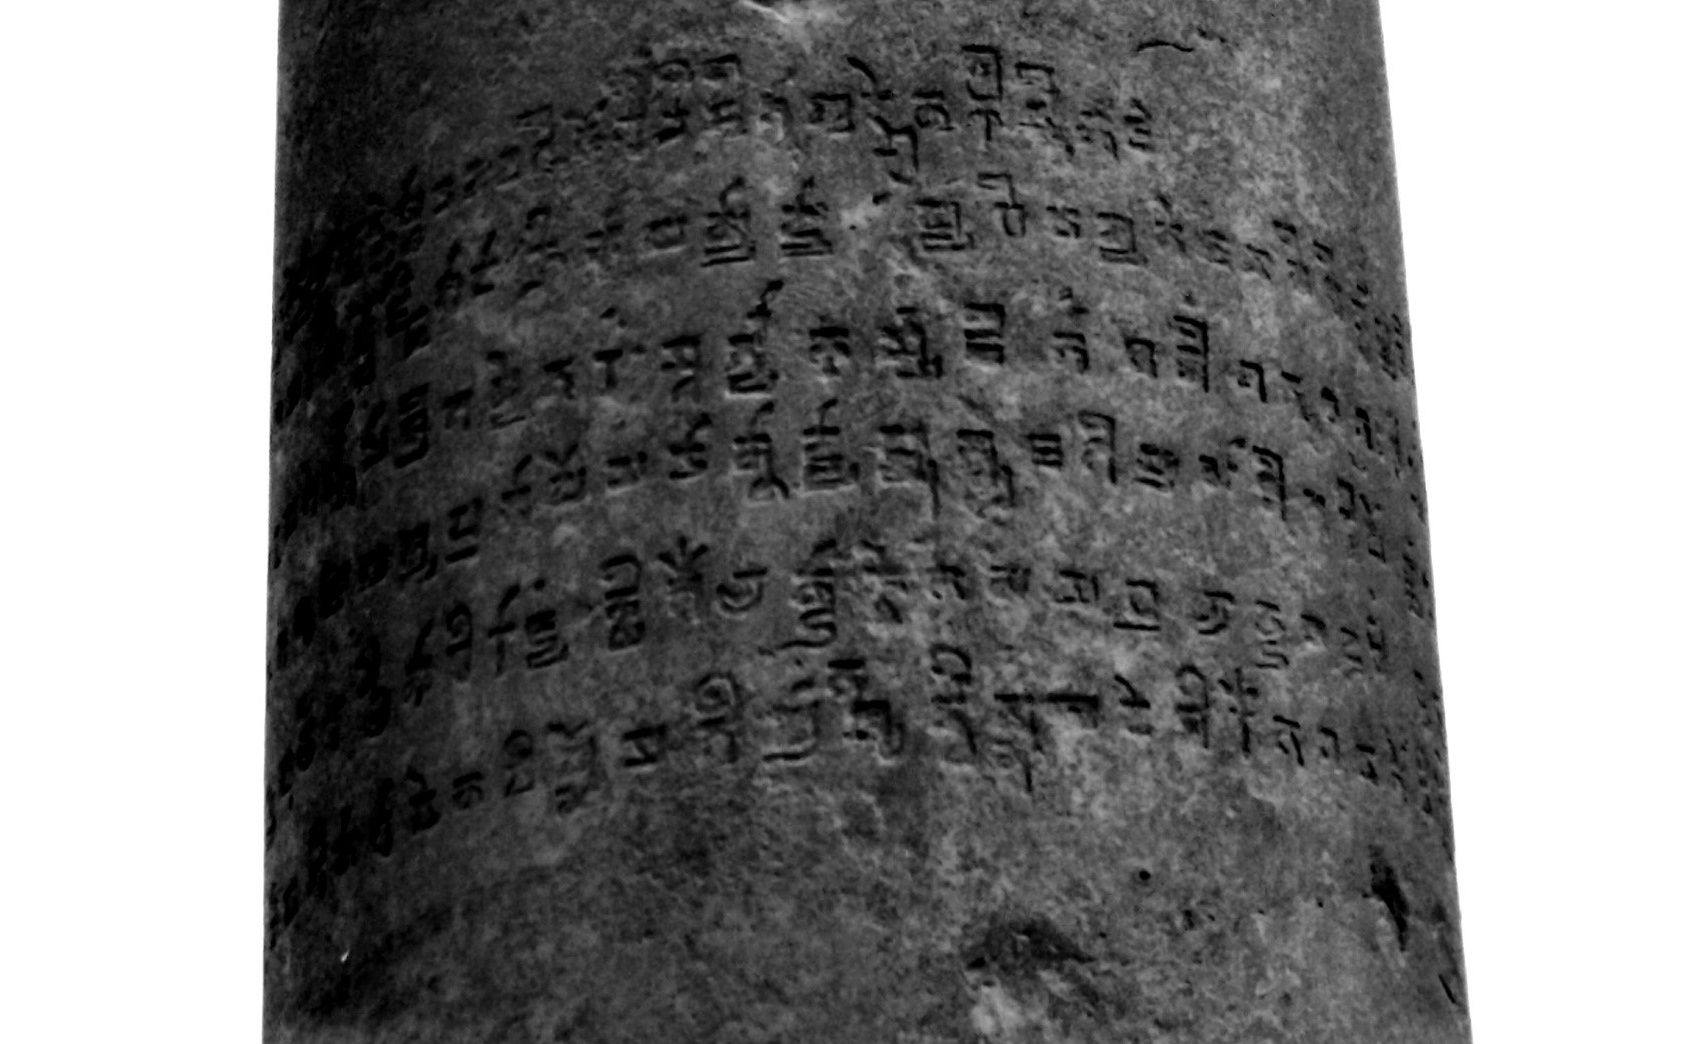 Close up of the Gupta era Brahmi script